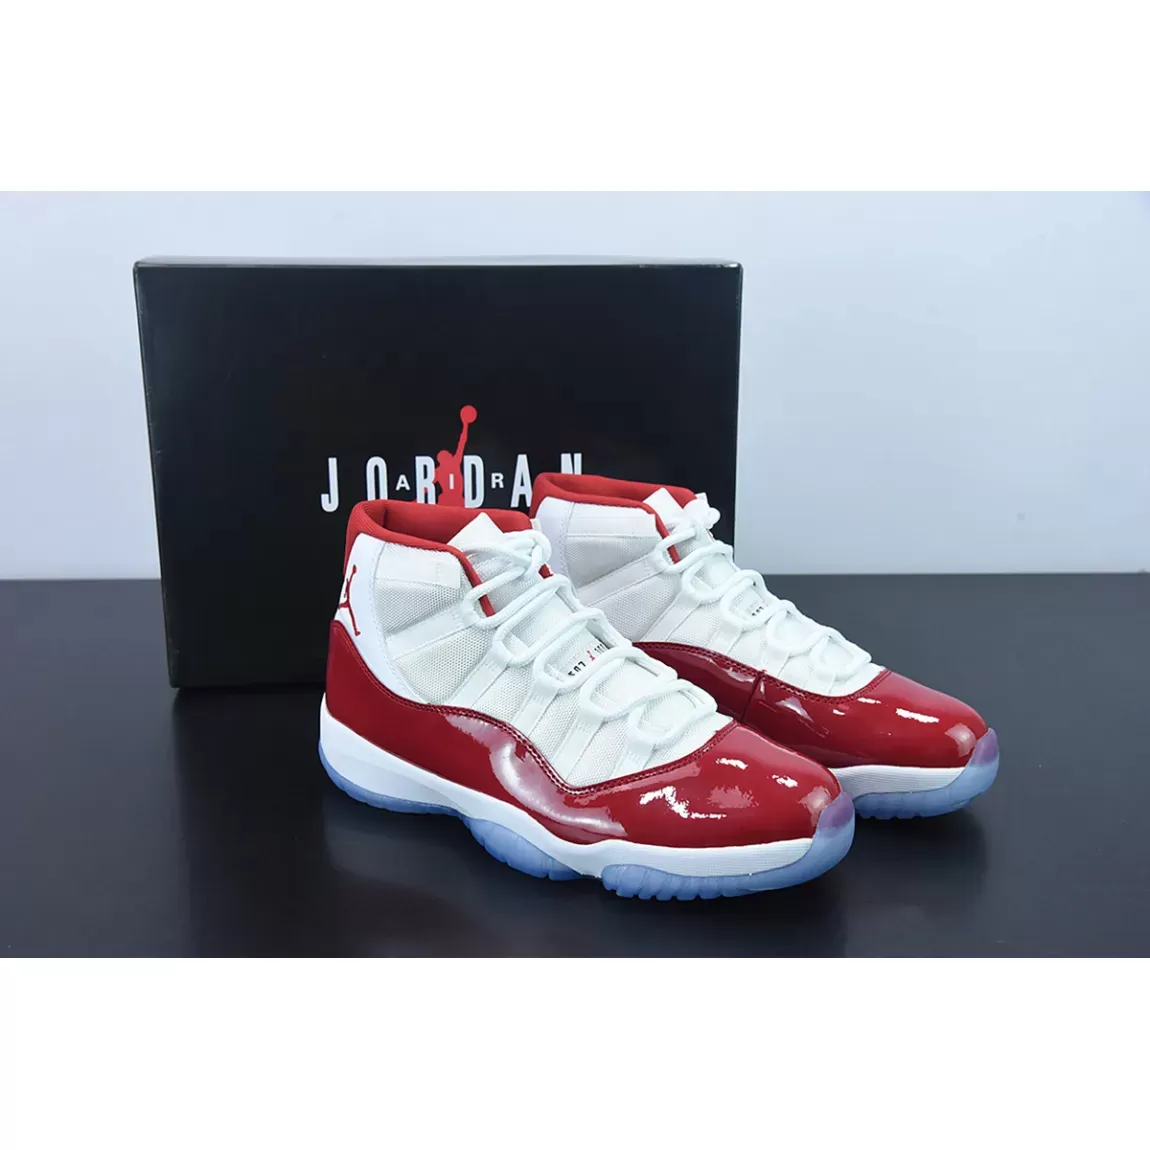 Jordan 11 Cherry High Release Date / Air Jordan 11 'Cherry' White/Varsity Red-Black